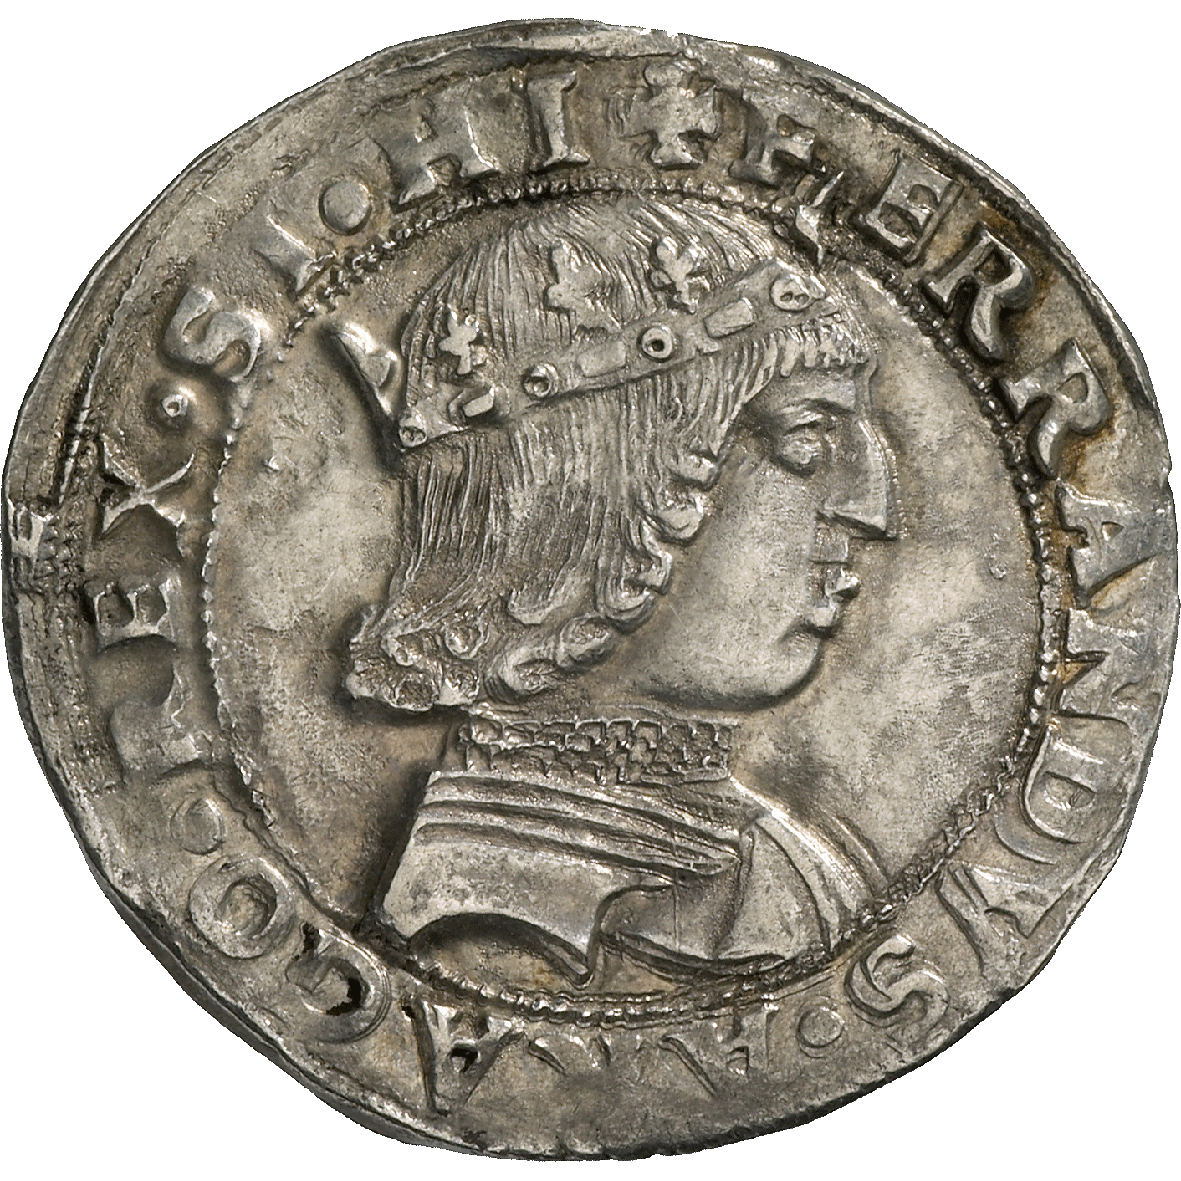 Kingdom of Napels, Ferdinand I of Aragon, Coronato  (obverse)